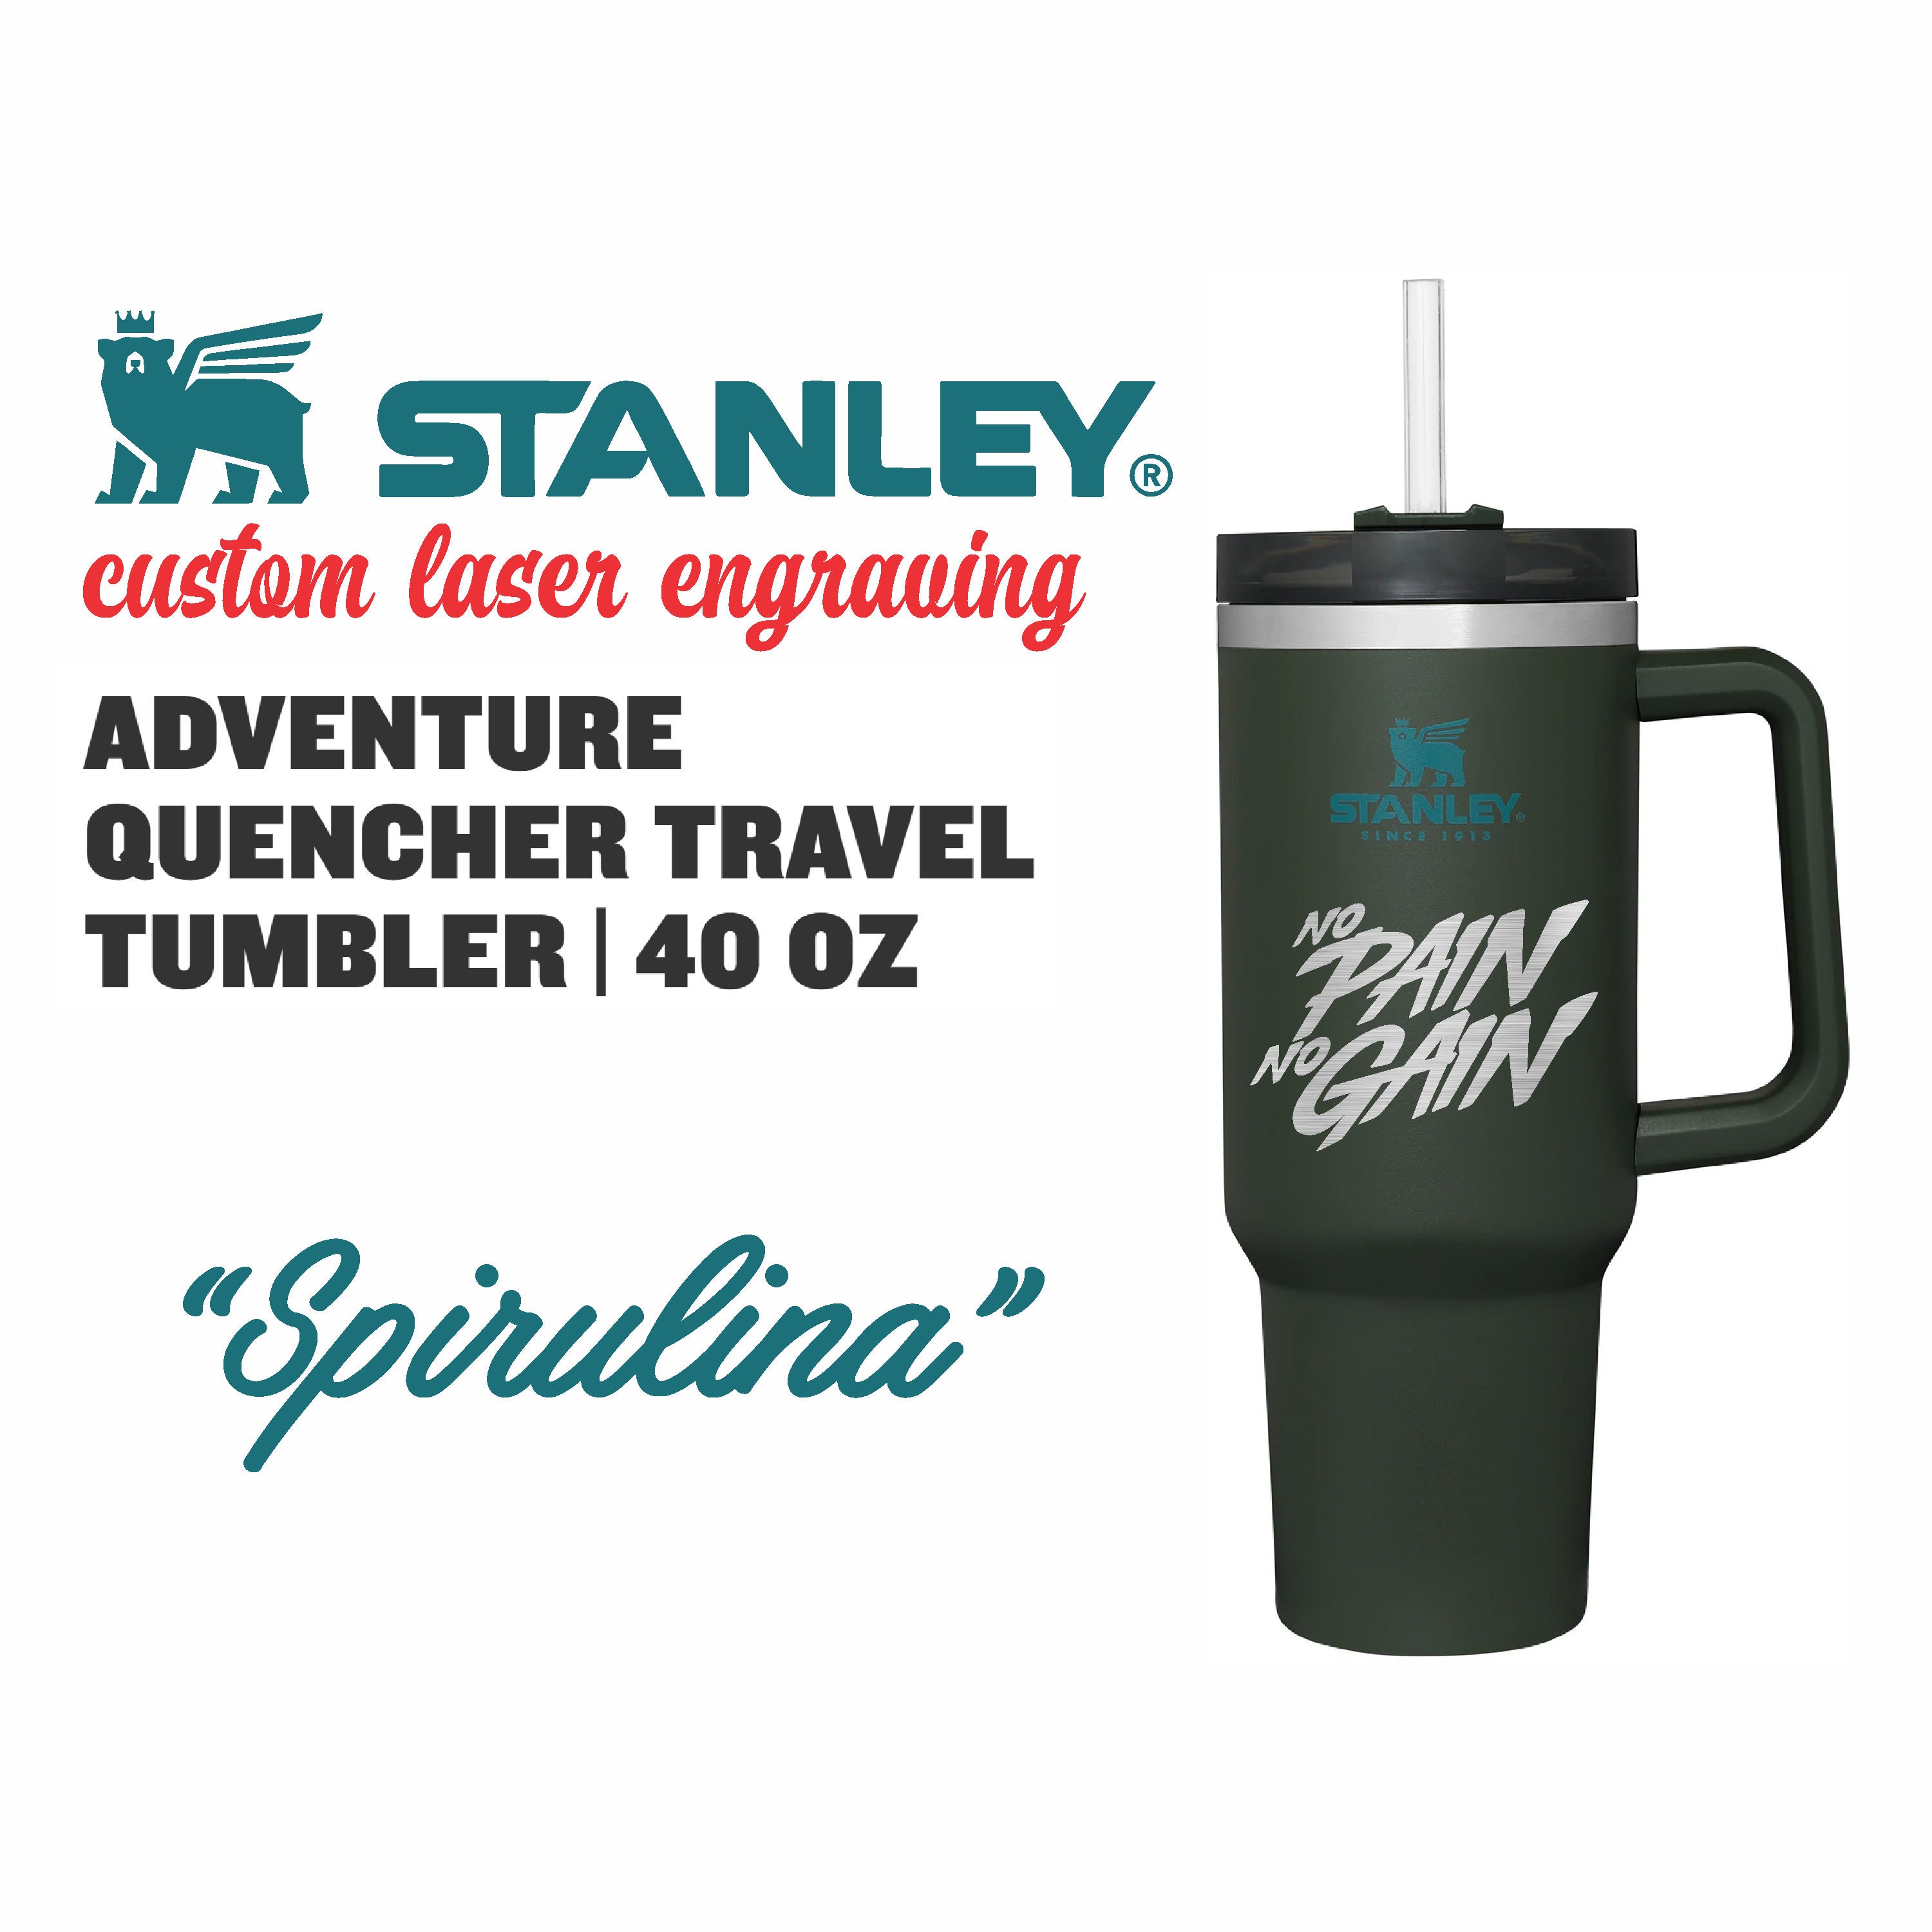 Stanley - SPIRULINA 40 oz Adventure Quencher Travel Tumbler (Forest Green)  - NWT